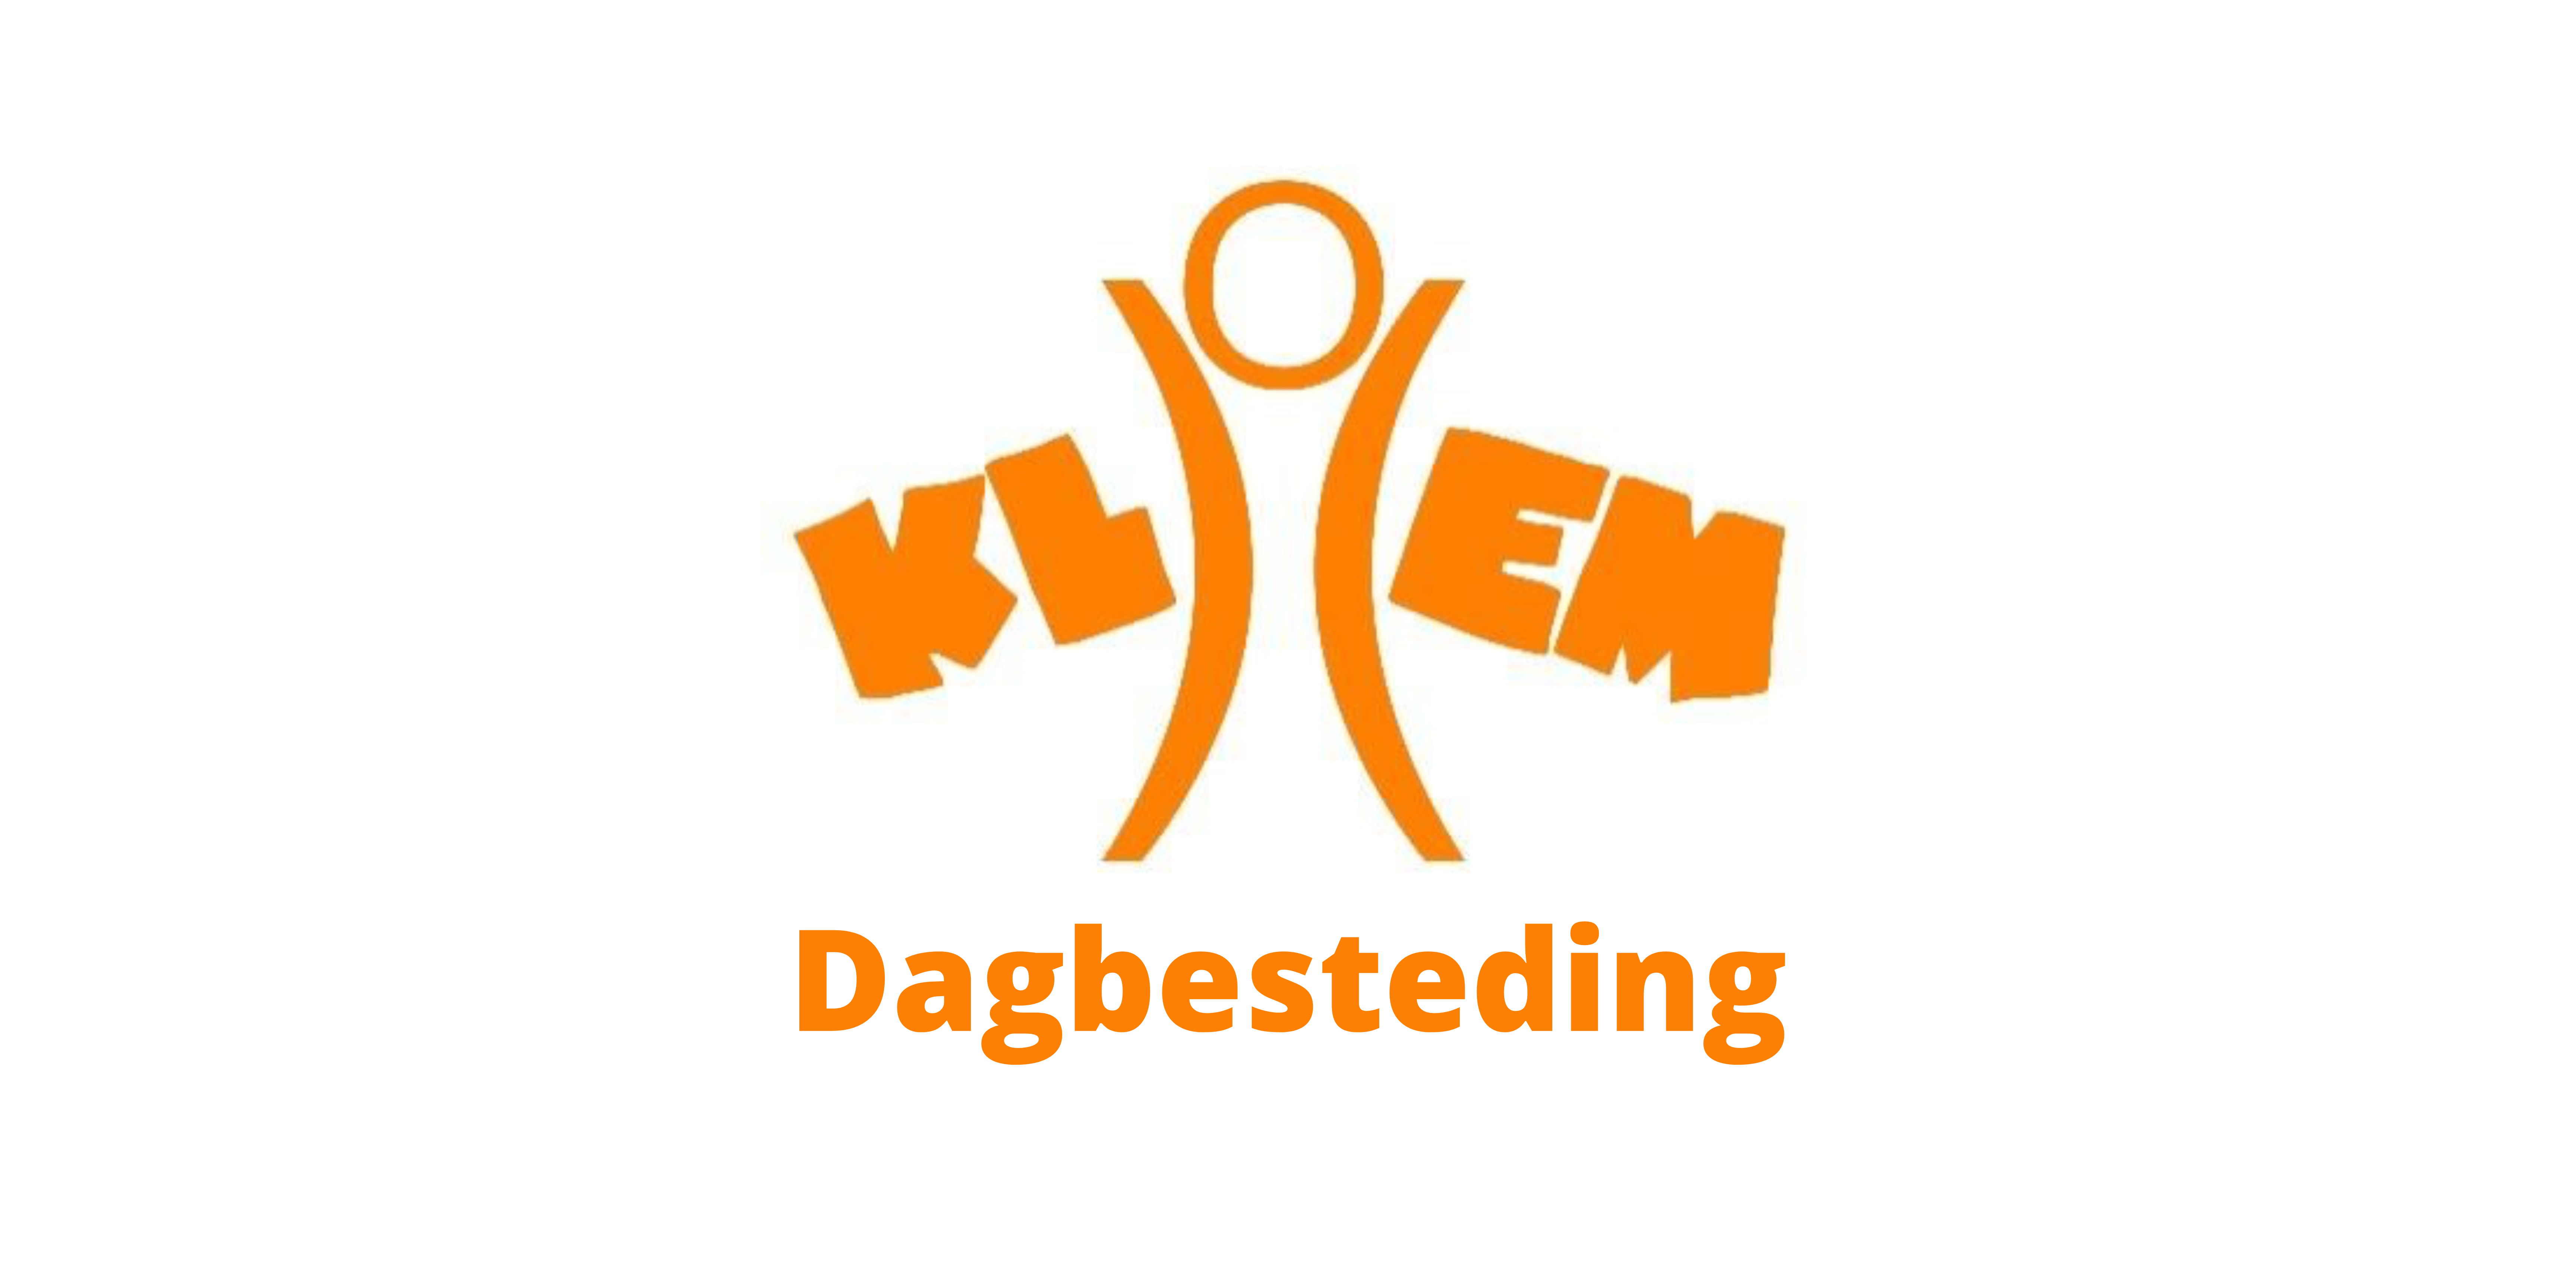 KLEM Dagbesteding